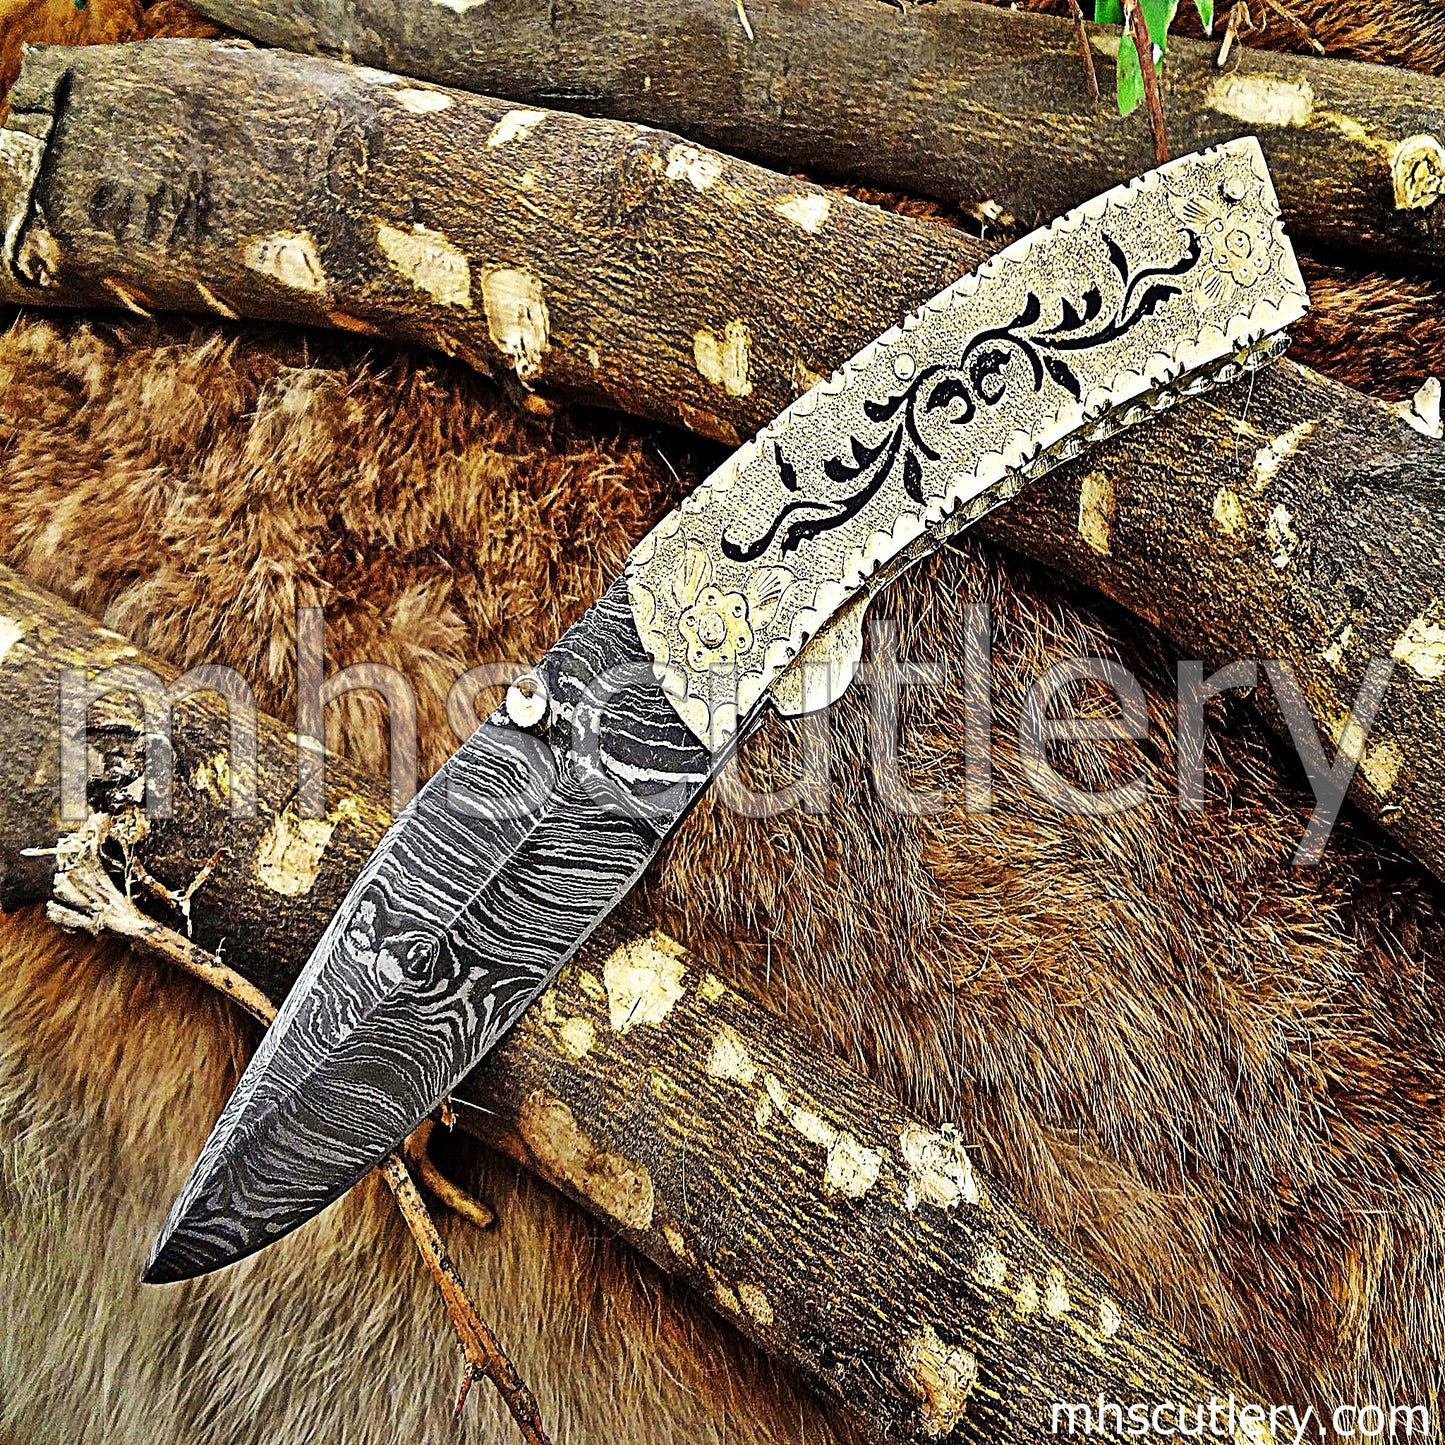 Hand Engraved Damascus Steel Pocket Knife / Engraved Brass | mhscutlery